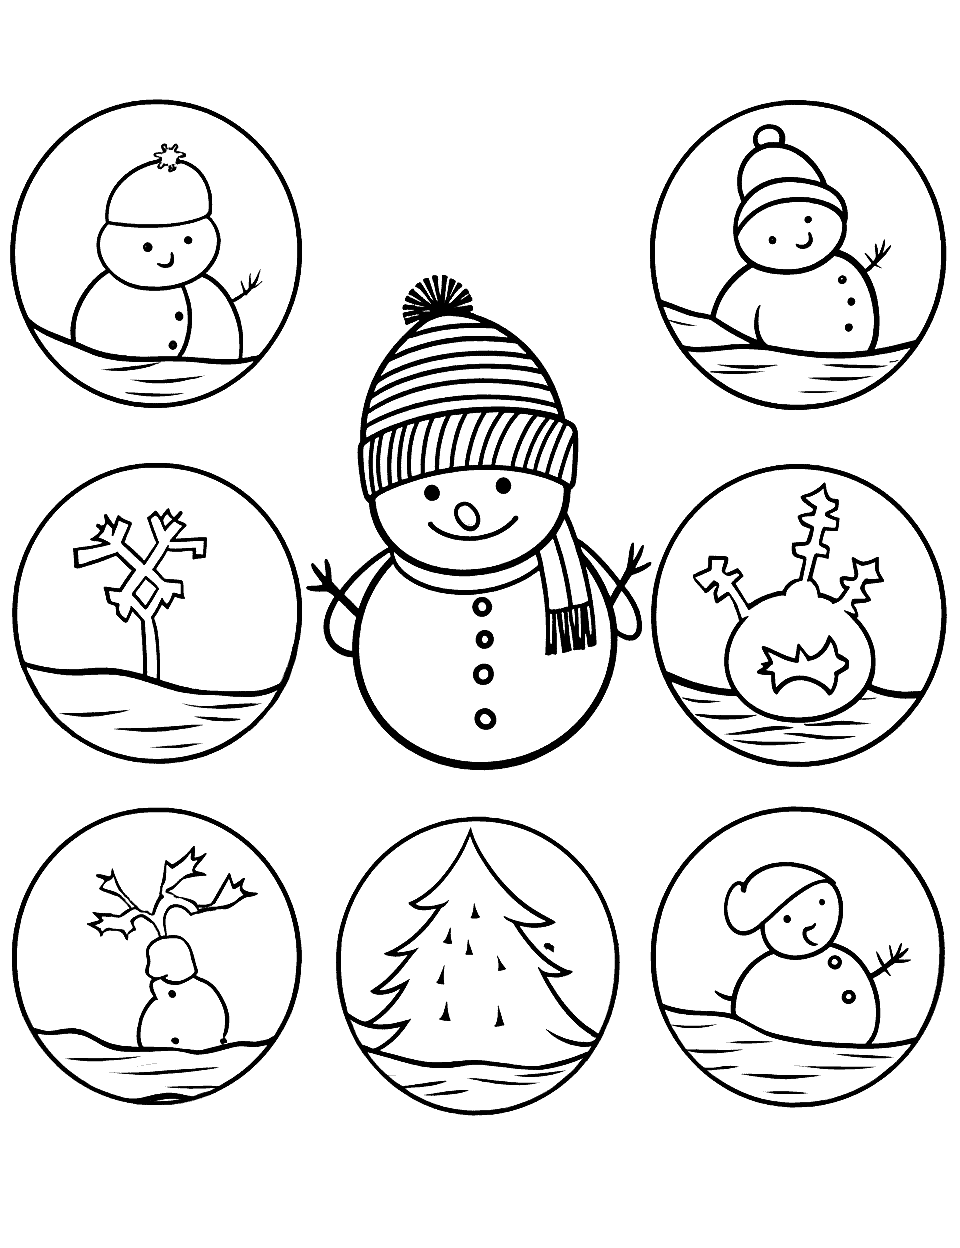 Kindergarten Winter Crafts Coloring Page - Images of typical kindergarten winter crafts, like paper plate snowmen.